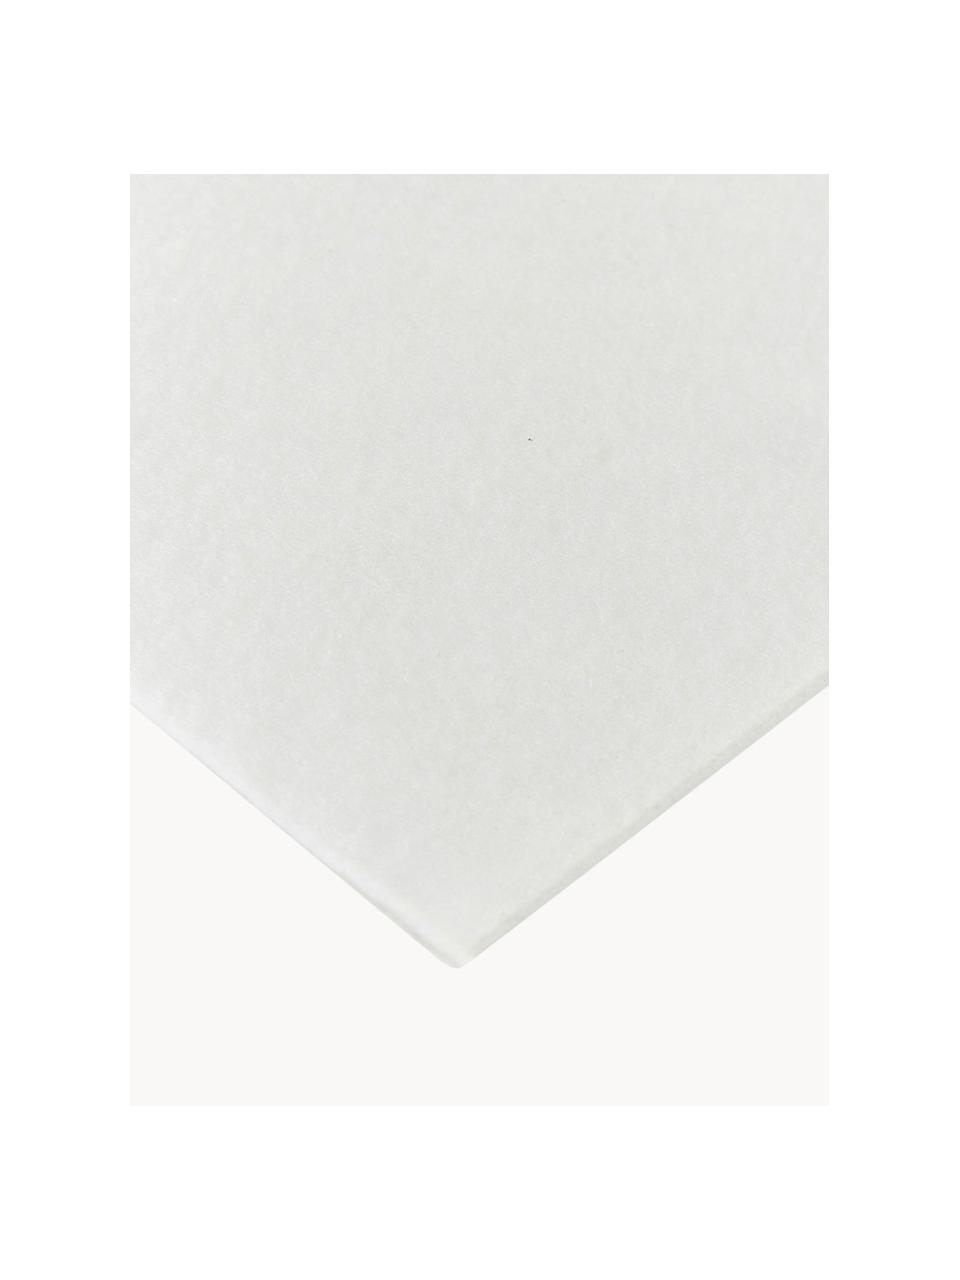 Base de alfombra My Slip Stop, Vellón de poliéster con revestimiento antideslizante, Blanco, An 150 x L 220 cm